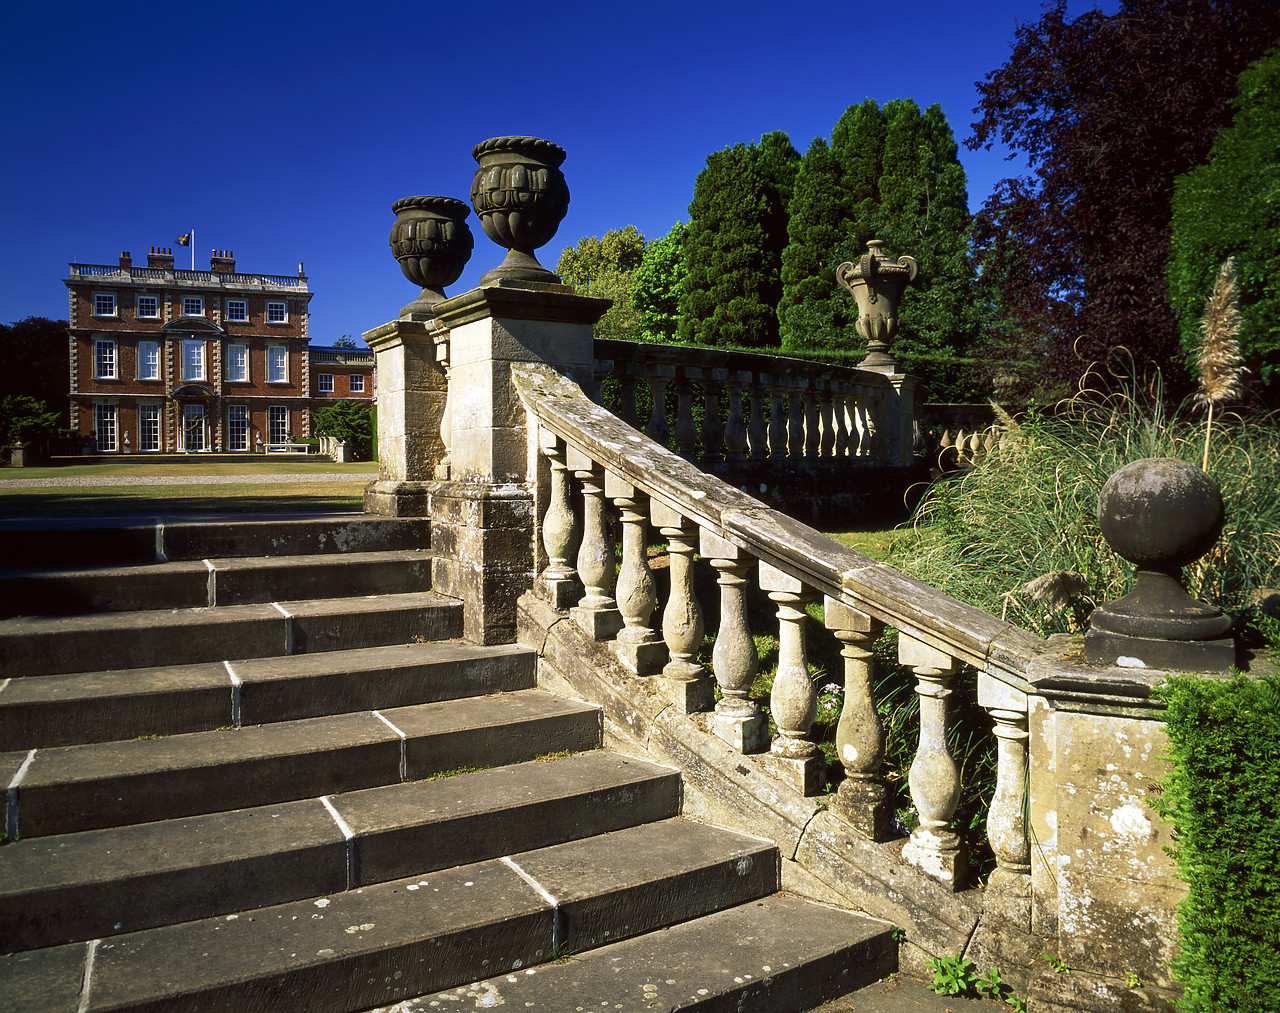 #060112-1 - Newby Hall & Gardens, North Yorkshire, England